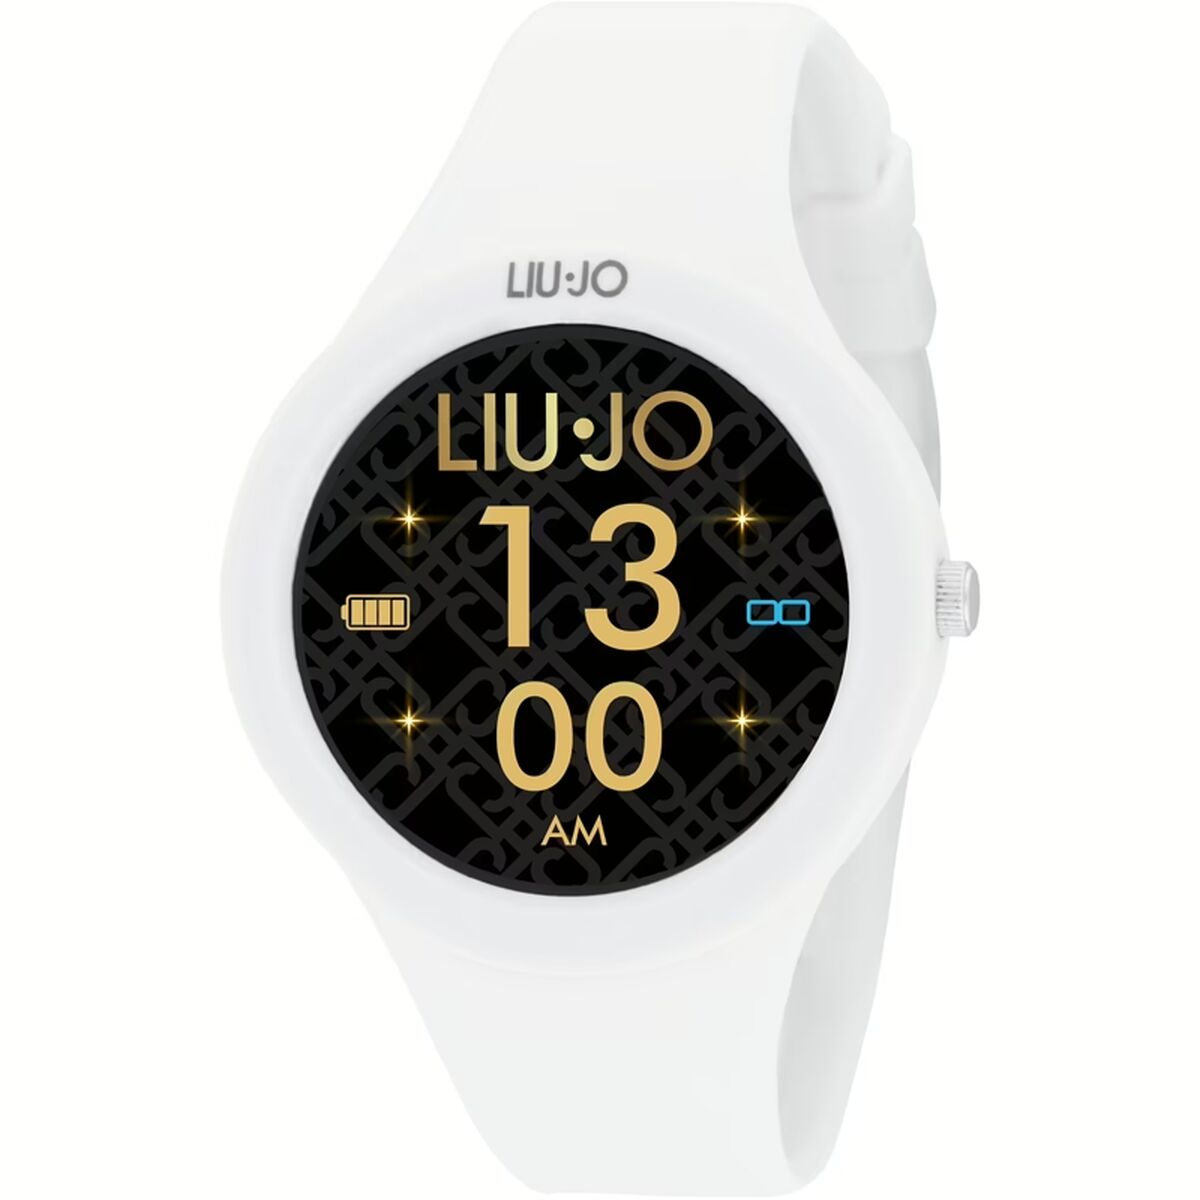 Kaufe Smartwatch LIU JO SWLJ120 bei AWK Flagship um € 112.00